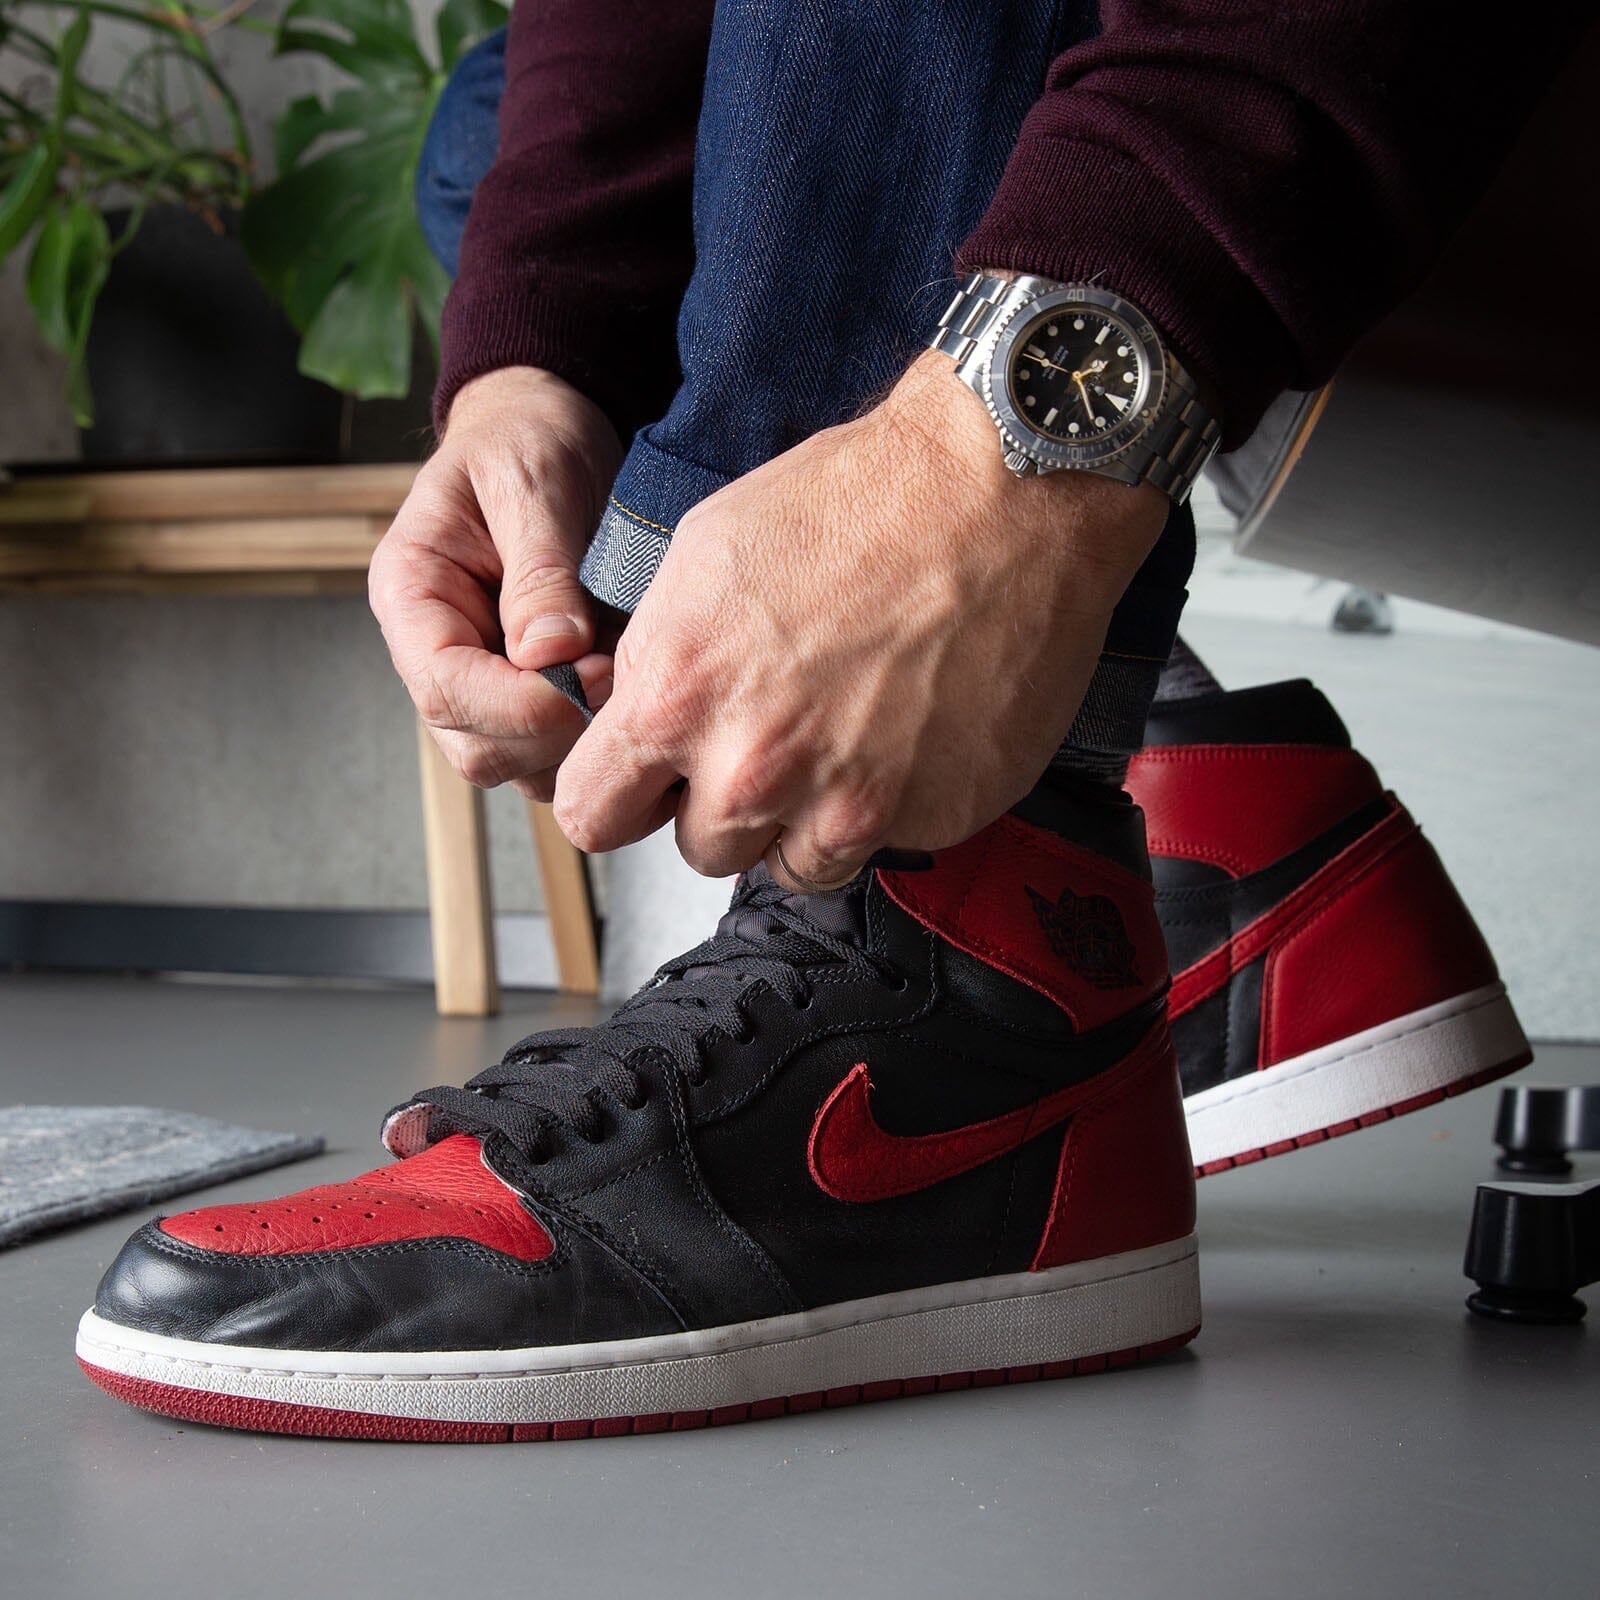 Bleeding Black and Red: Examining the Iconic Air Jordan 1